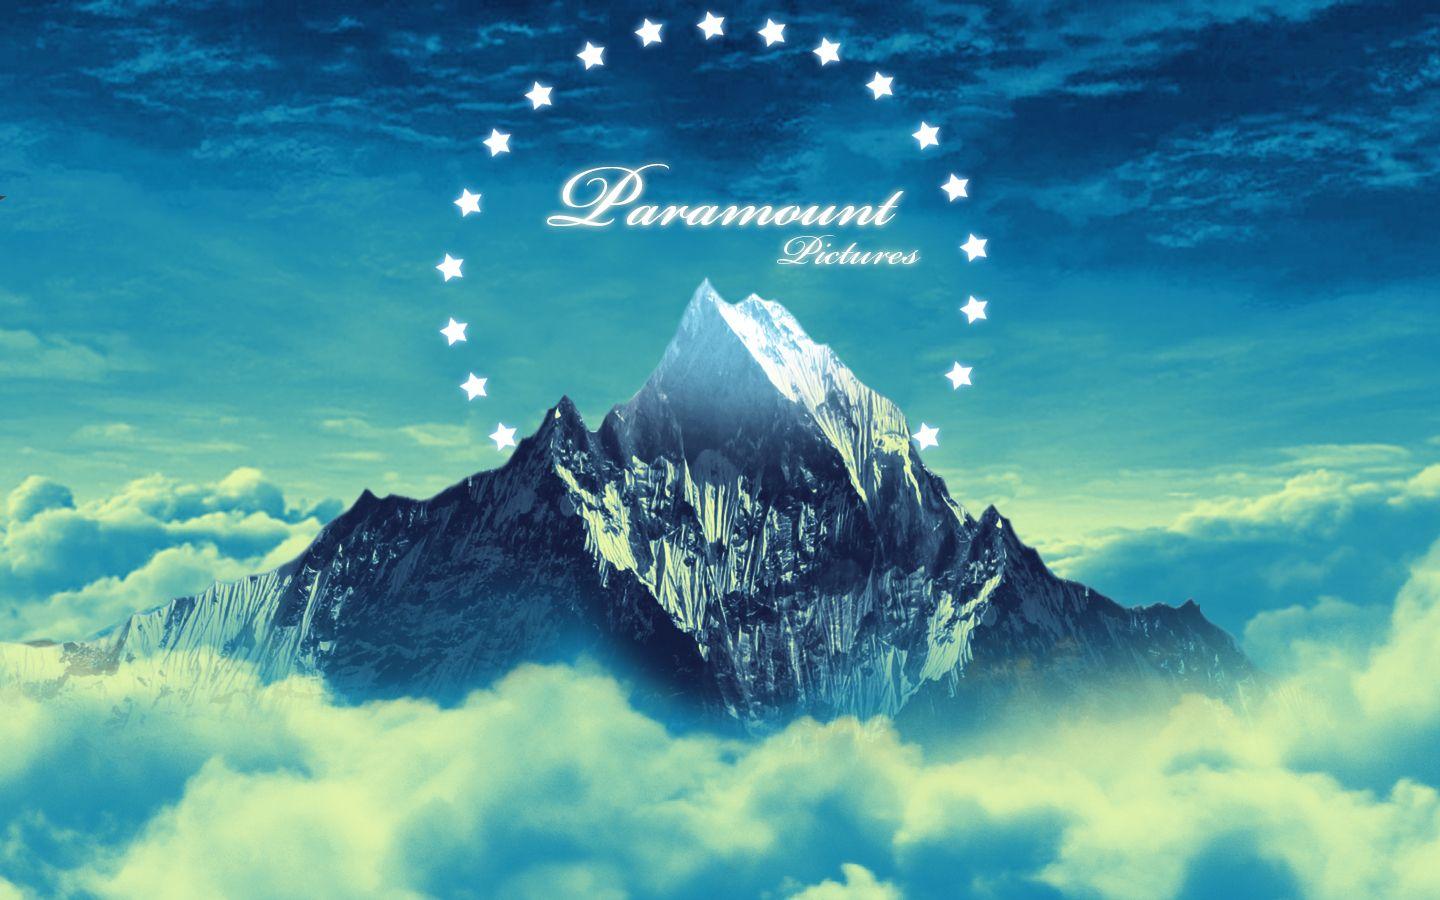 New Paramount Logo - Paramount Pictures Corporation images New Paramount Pictures Logo HD ...